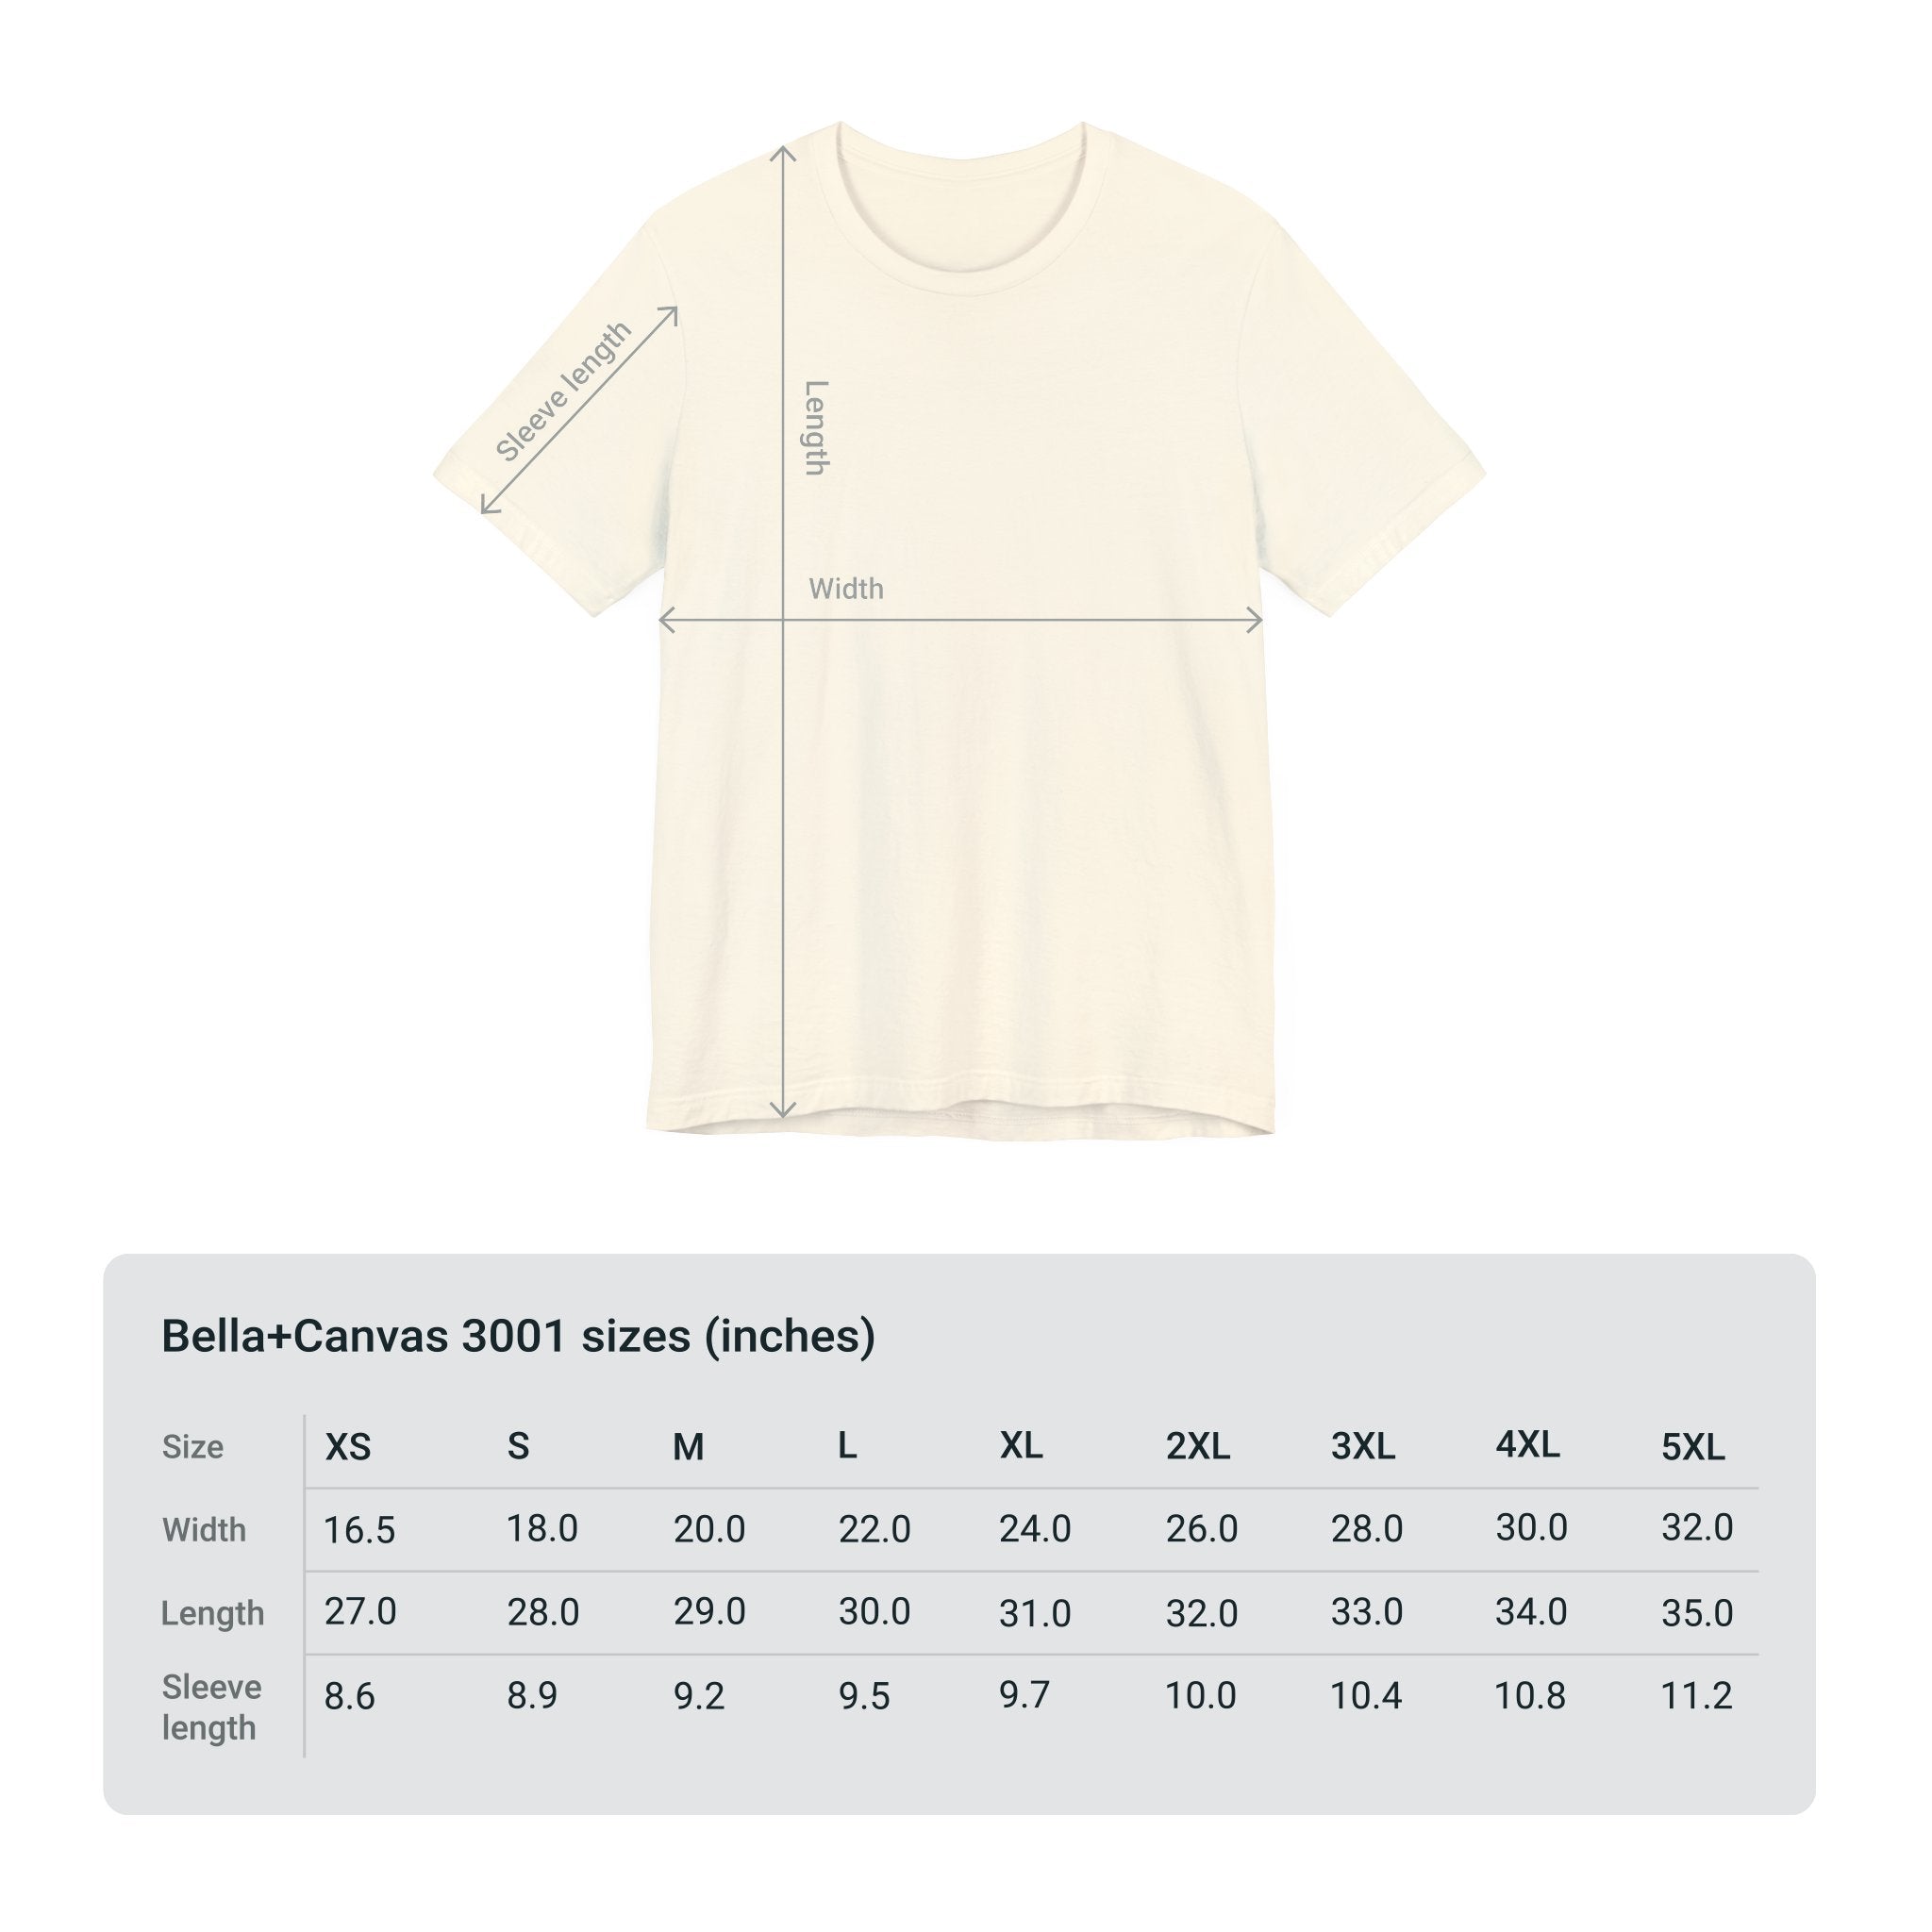 Custom Retro - a - go - go Series Foods From Corn Unisex Jersey Short Sleeve T - Shirt - POPvault